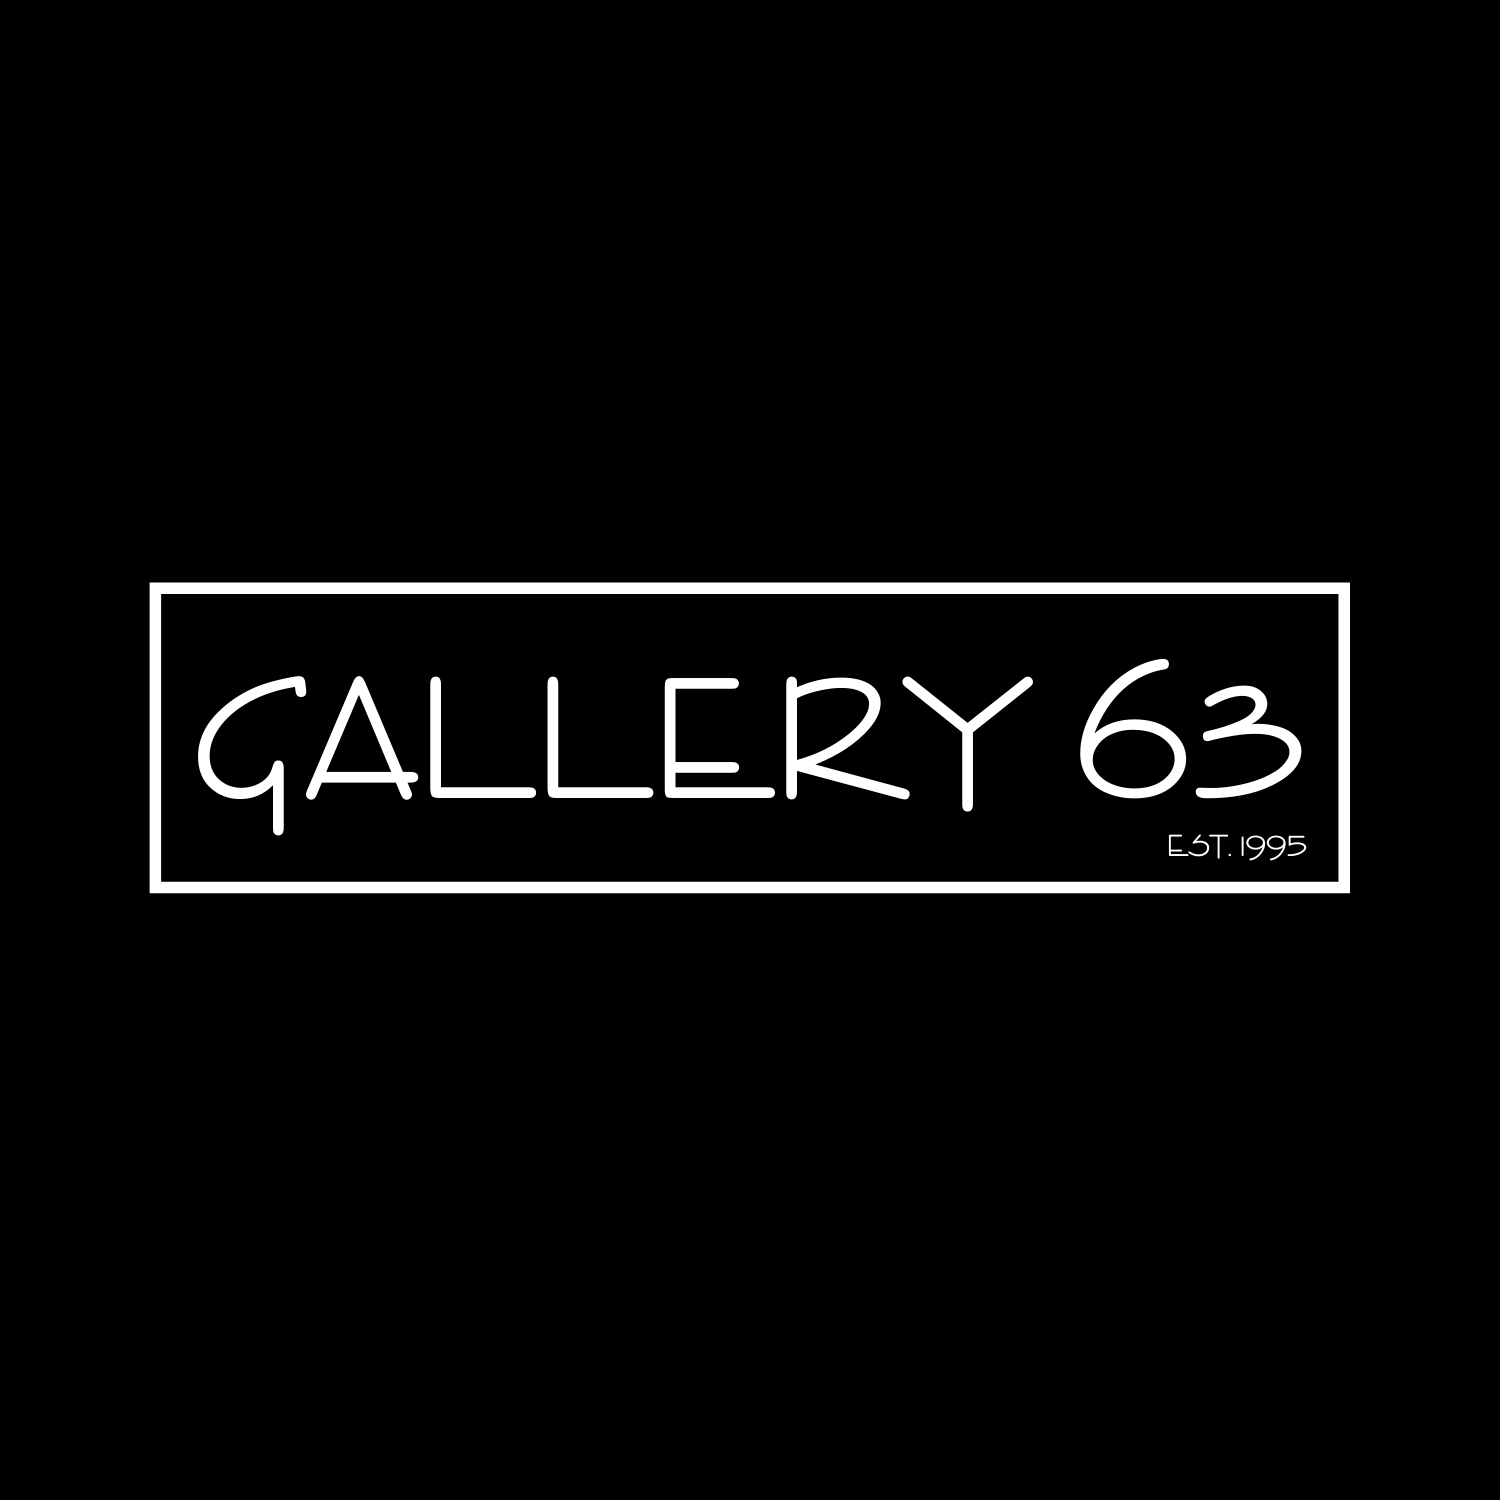 Gallery 63